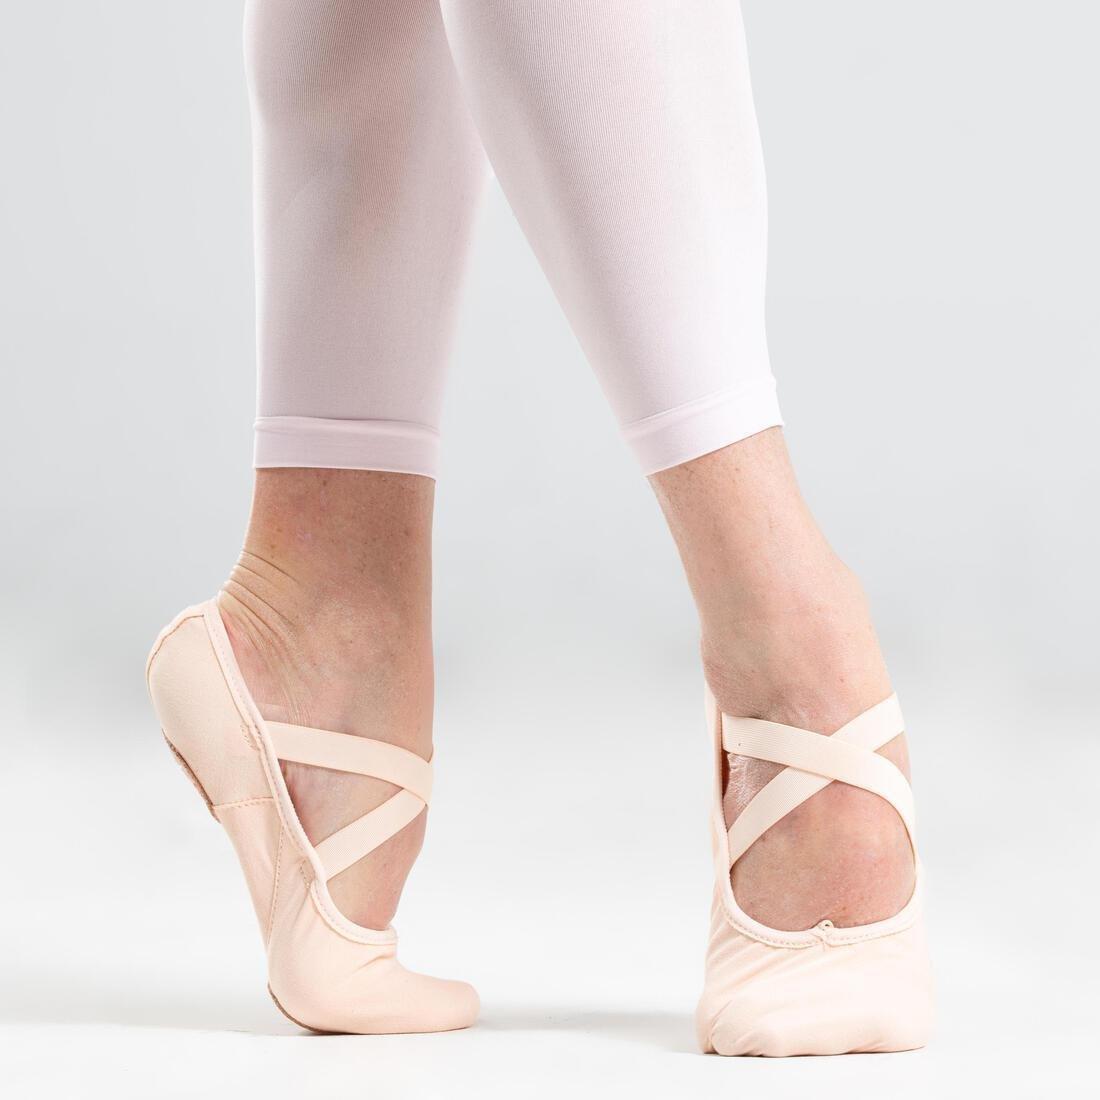 STAREVER - Stretch Canvas Split-Sole Demi-Pointe Ballet Shoes Size 7.5 to 8, Bisque